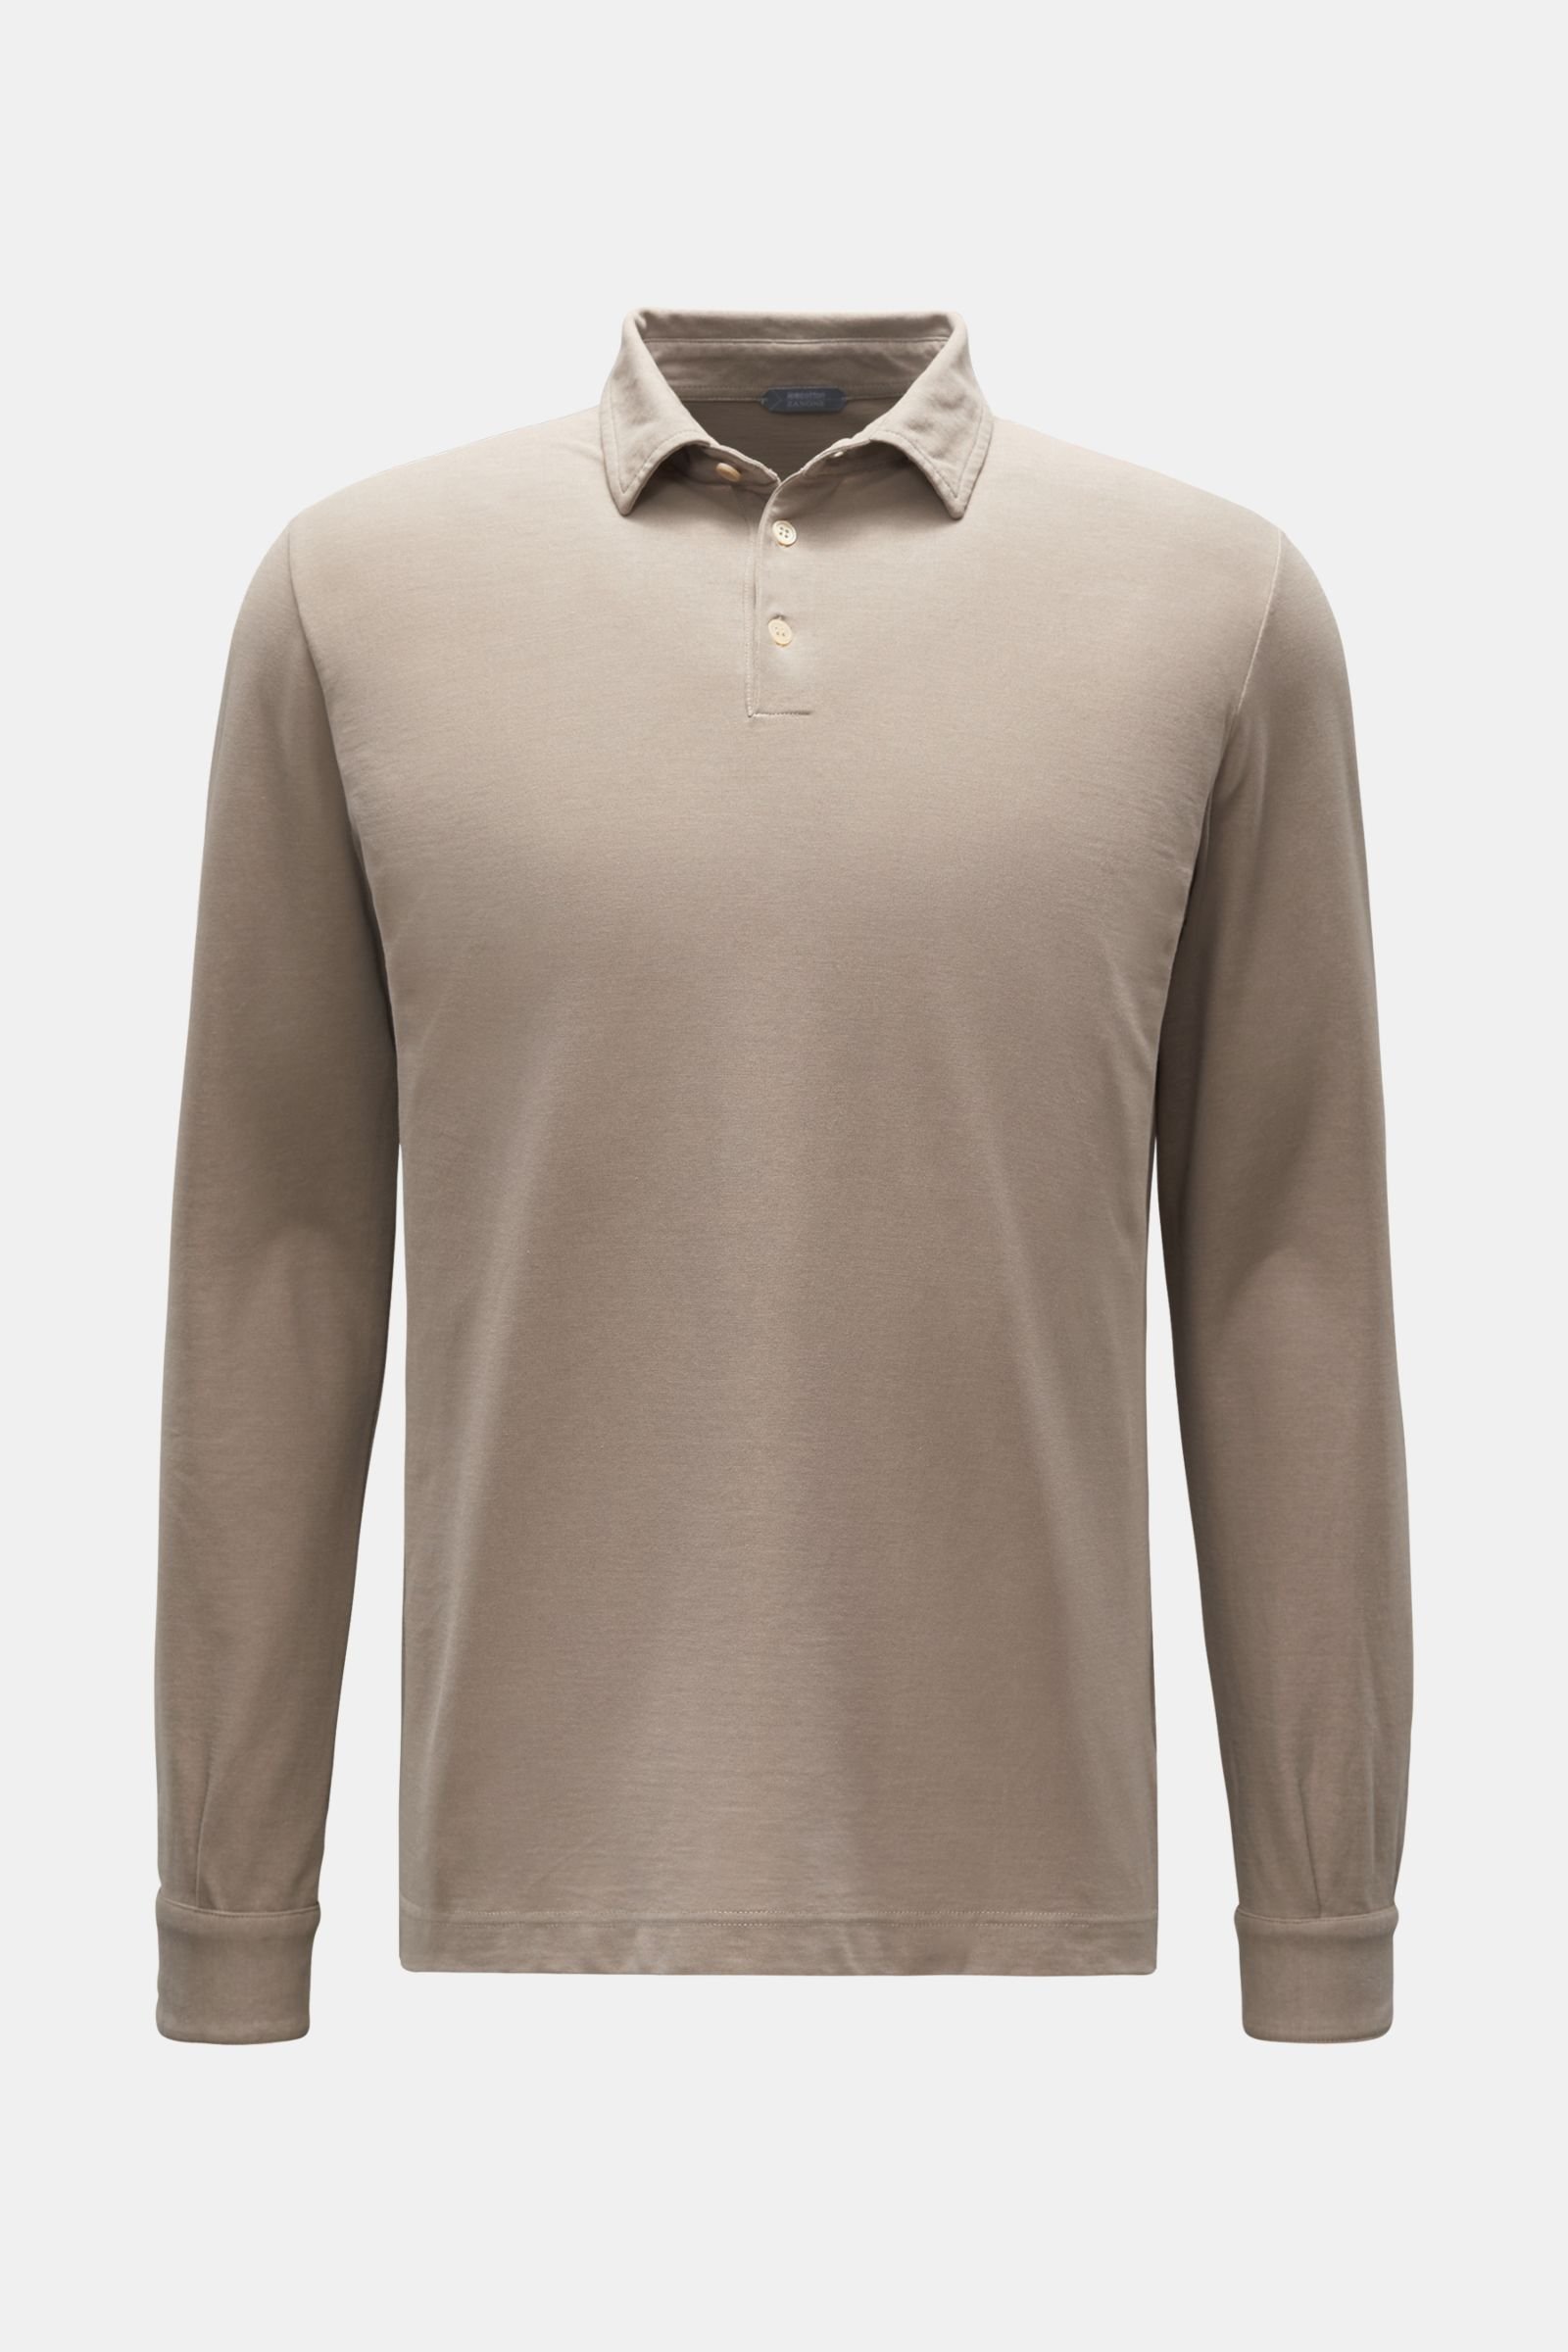 Long sleeve polo shirt grey-brown